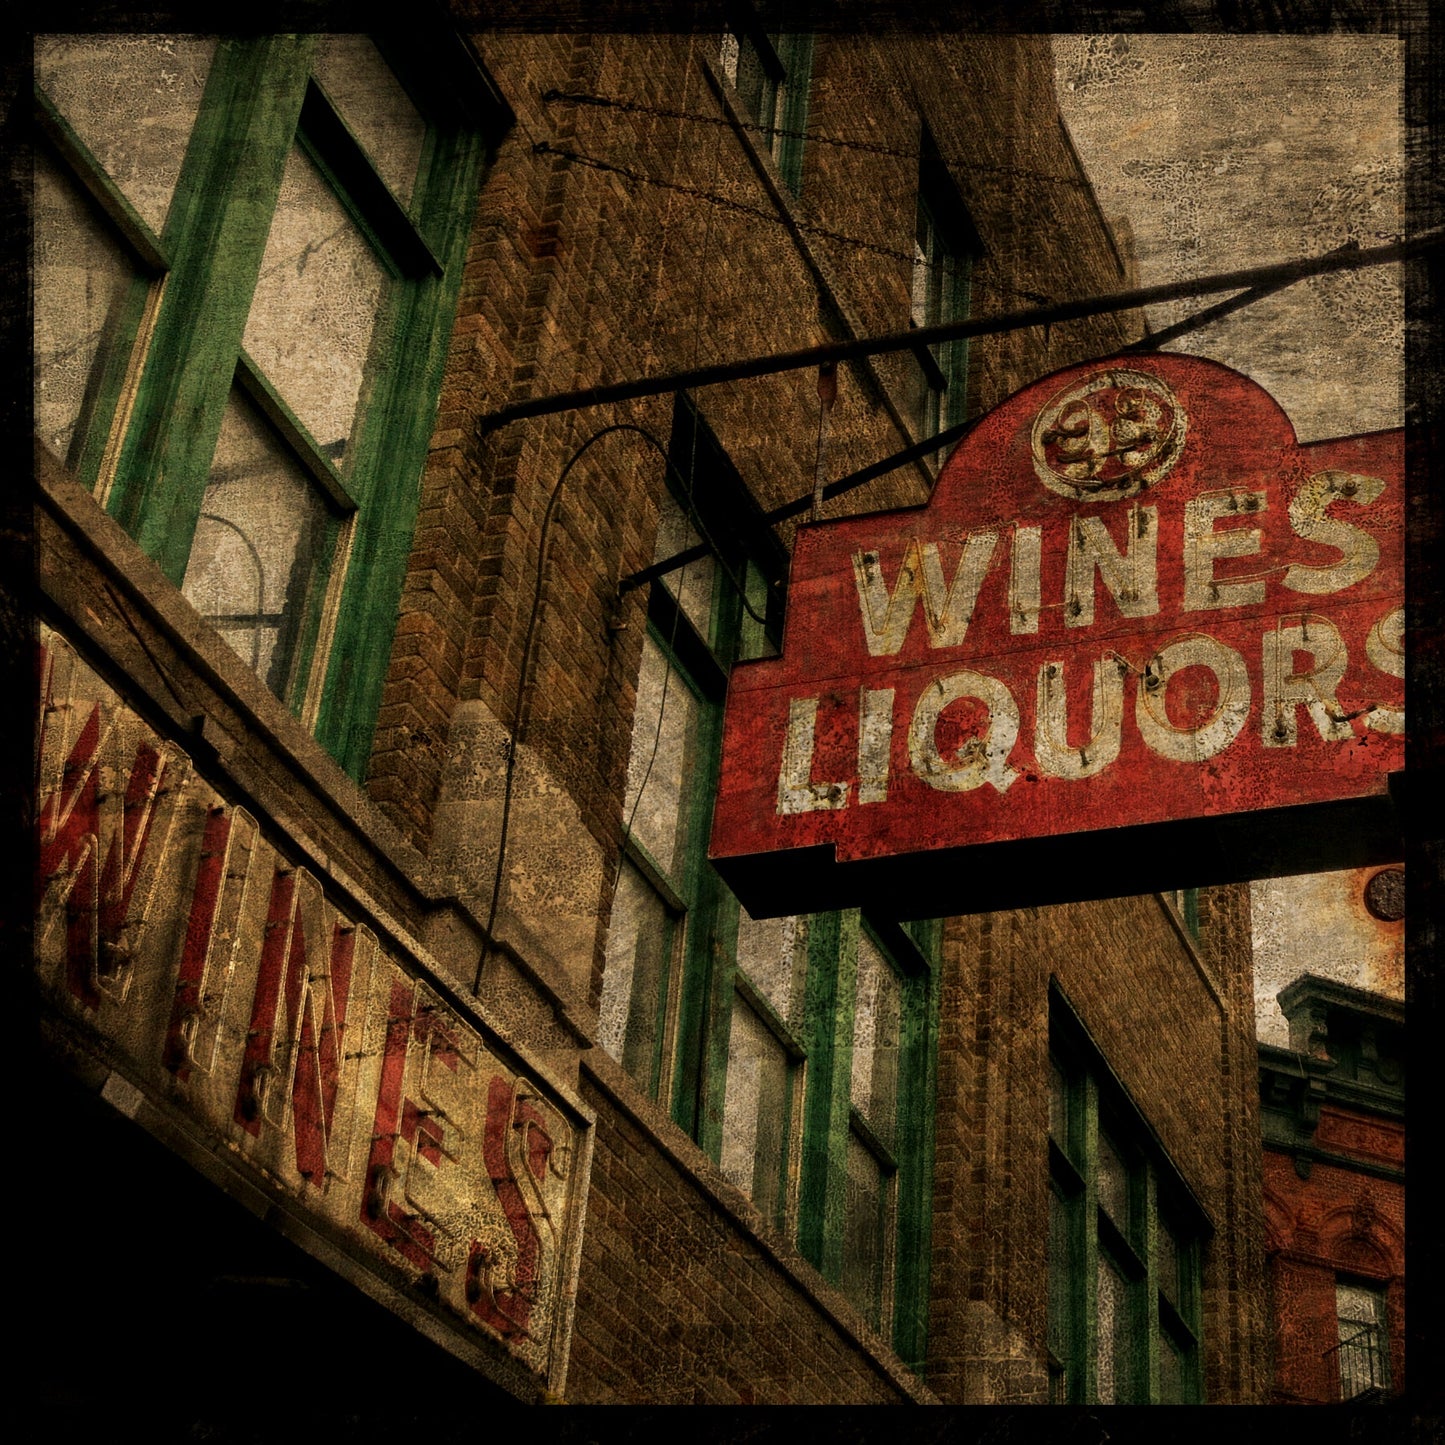 Wines' Wines Liquors Photograph